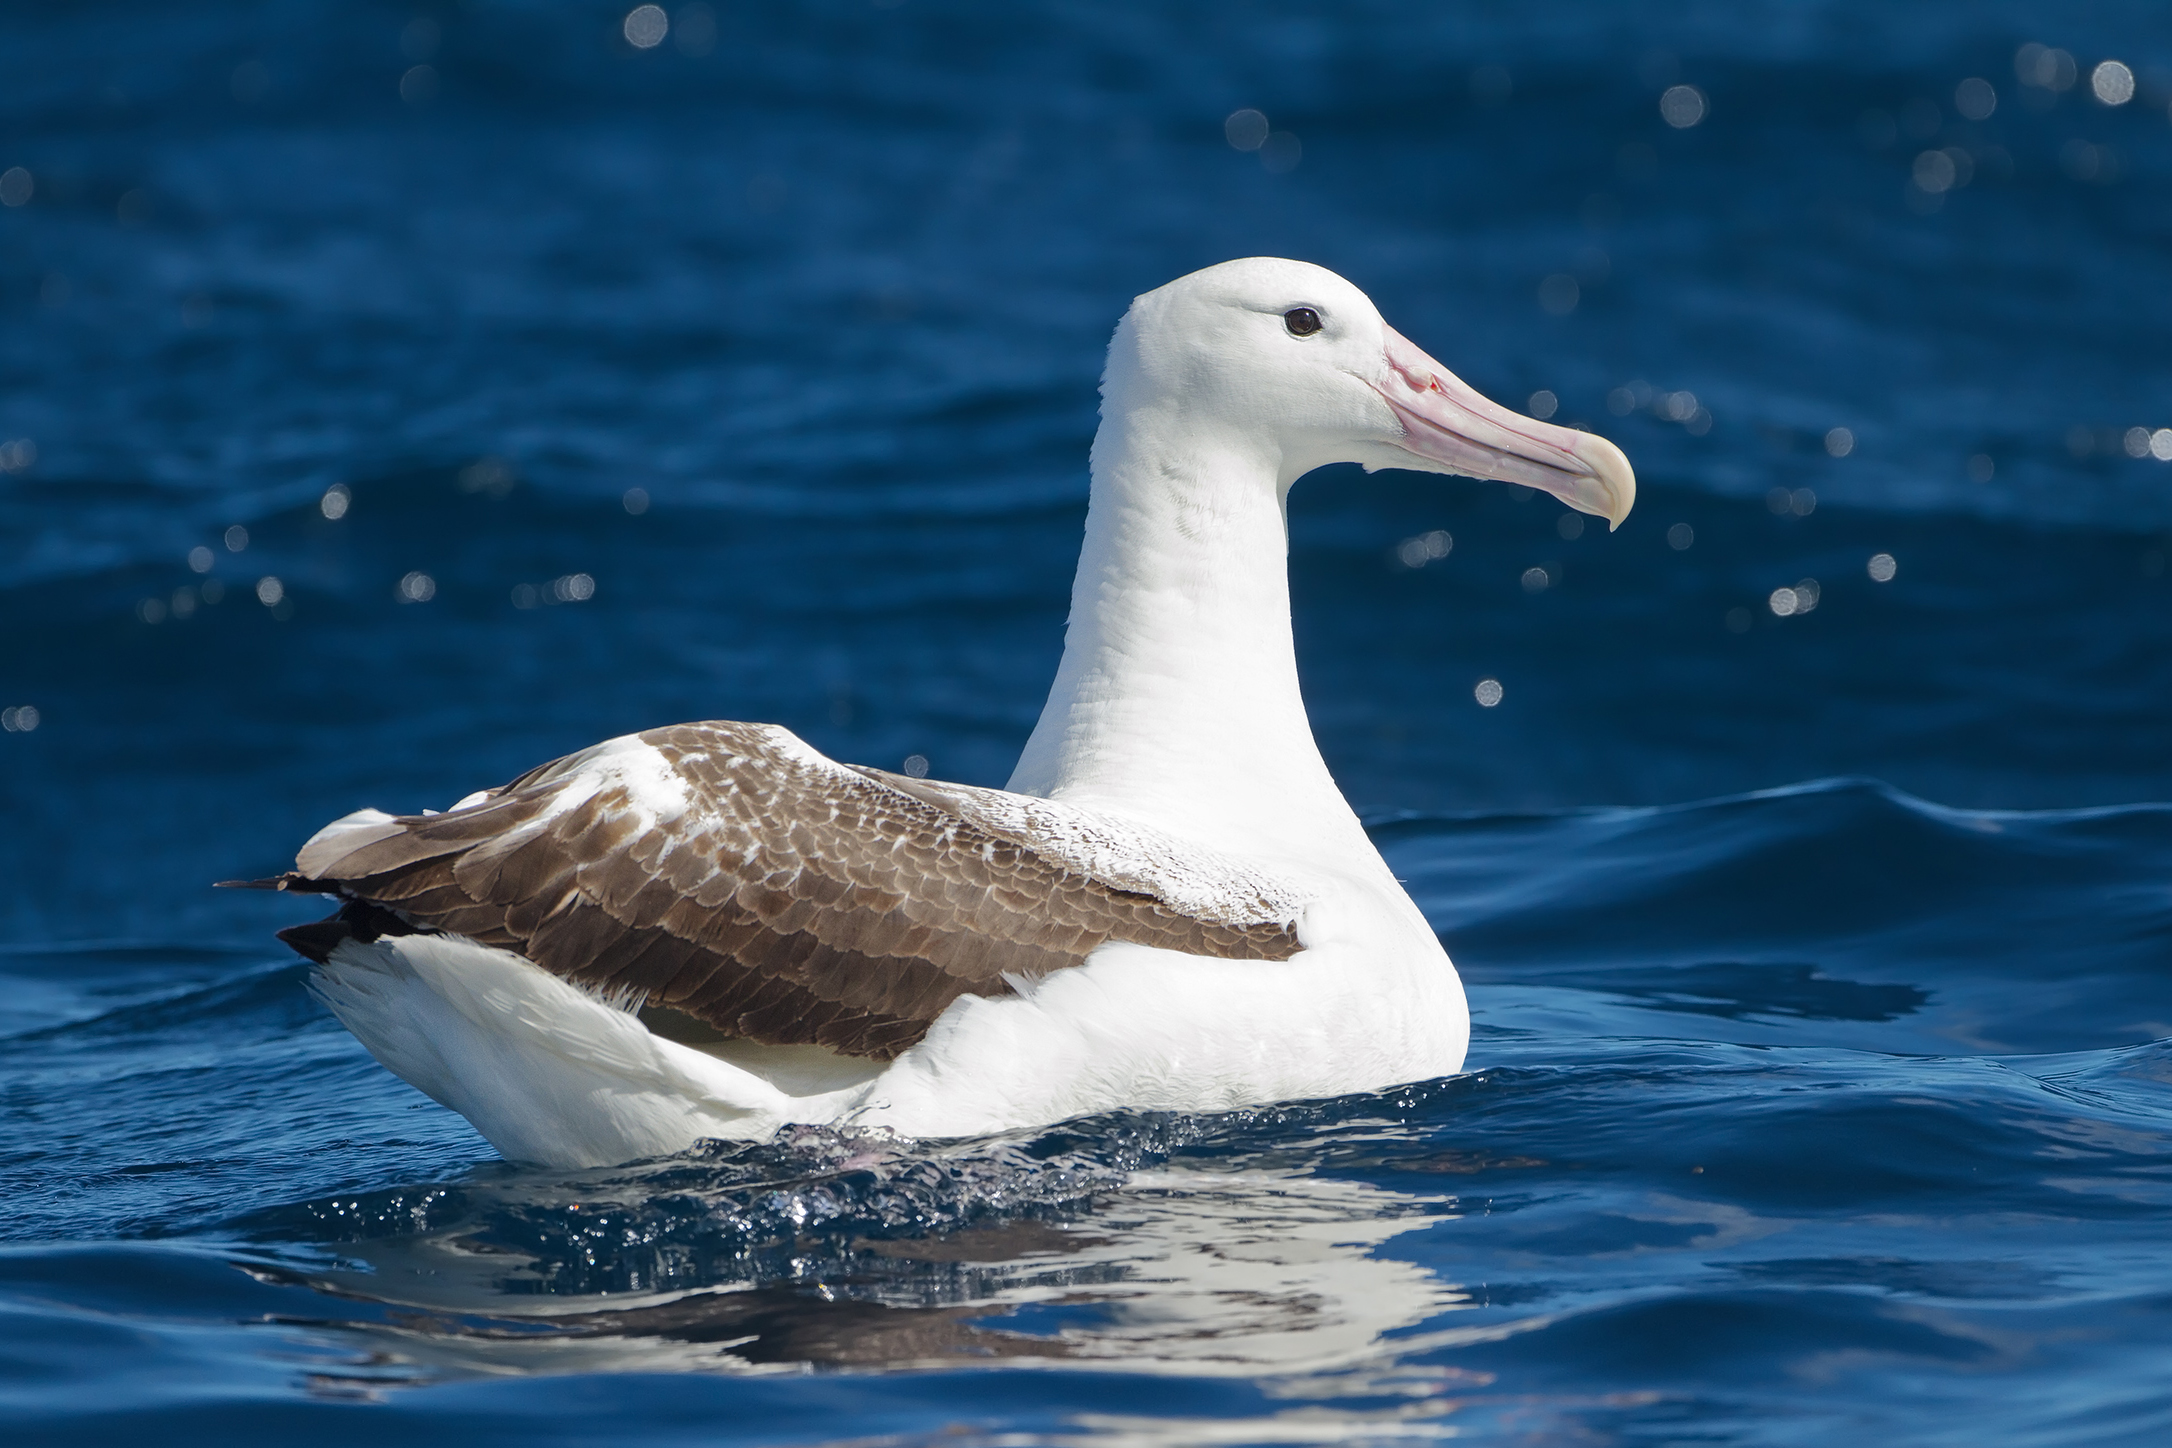 Wangering albatross